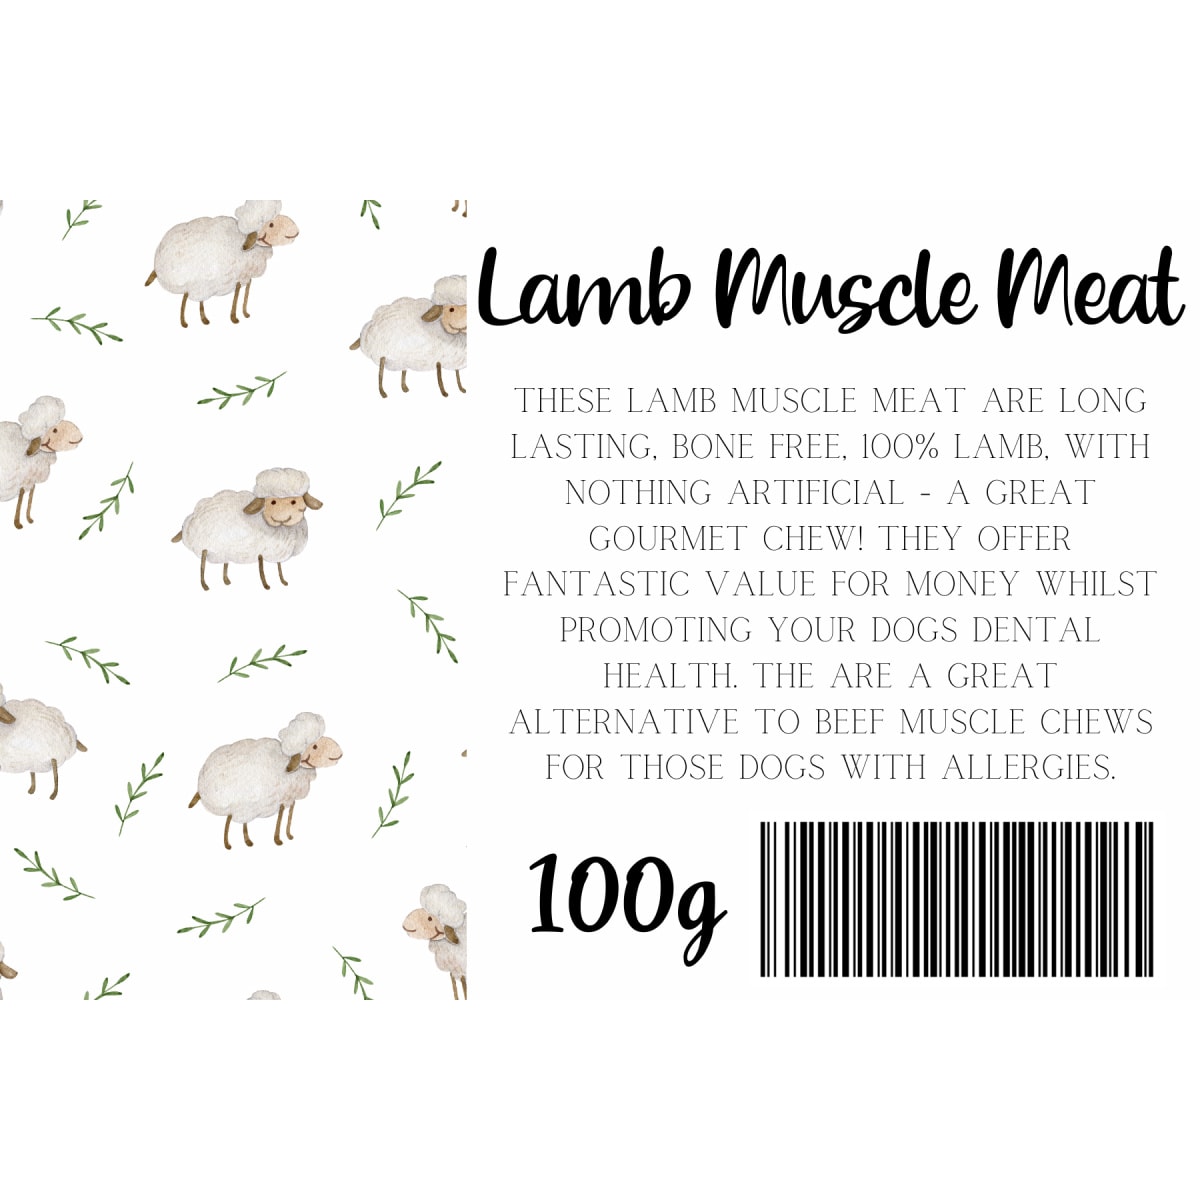 Lamb Muscle Meat 100g Main Image